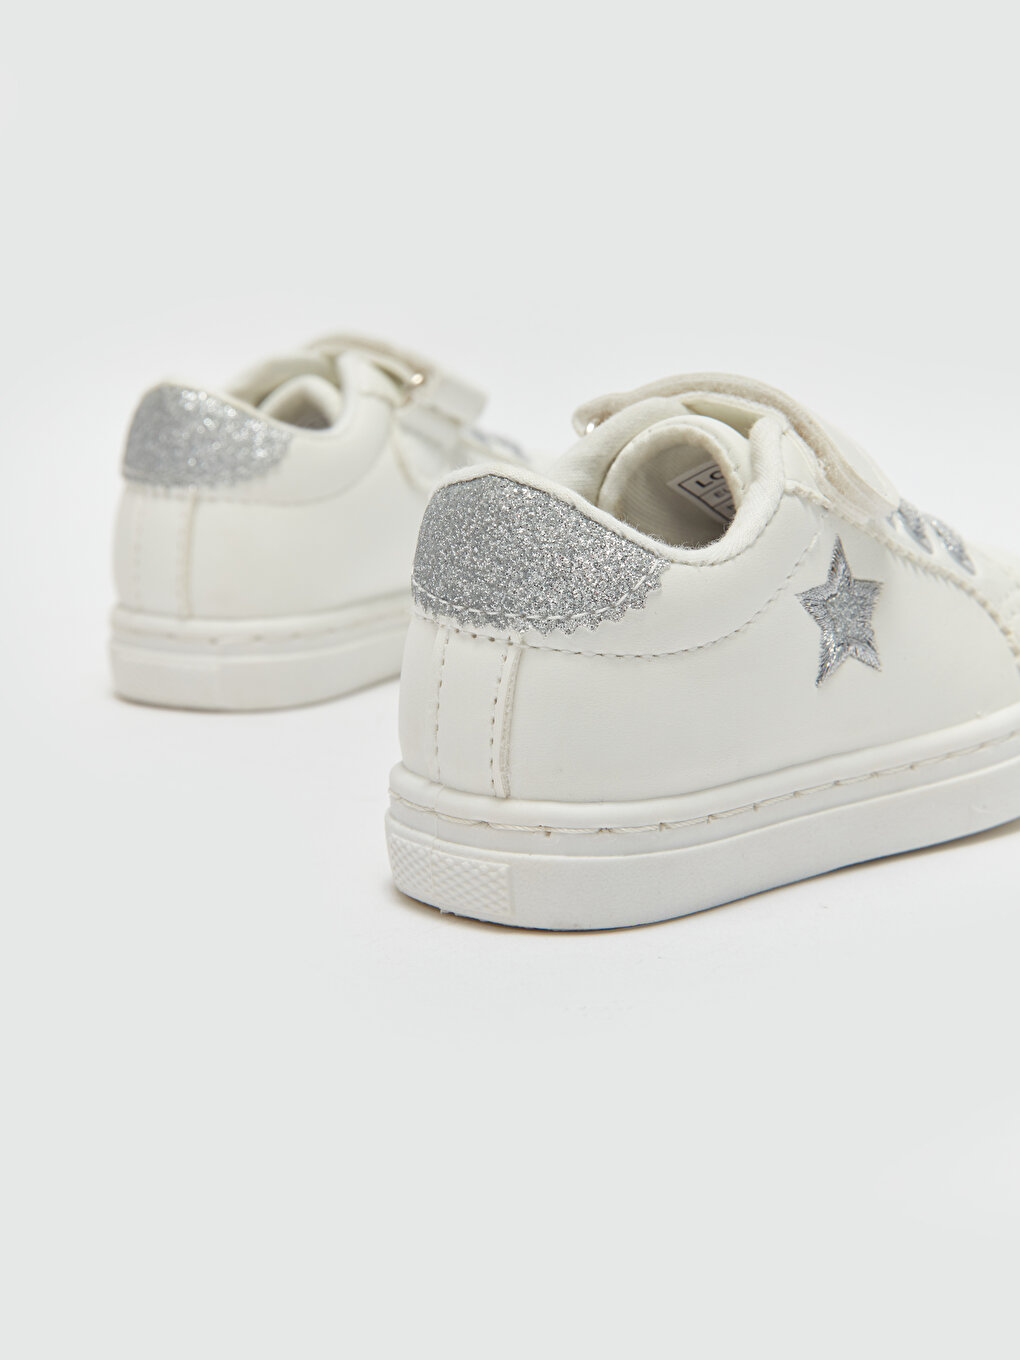 Star Patterned Baby Girl Sports Shoes -S4BG85Z1-R9K - S4BG85Z1-R9K 